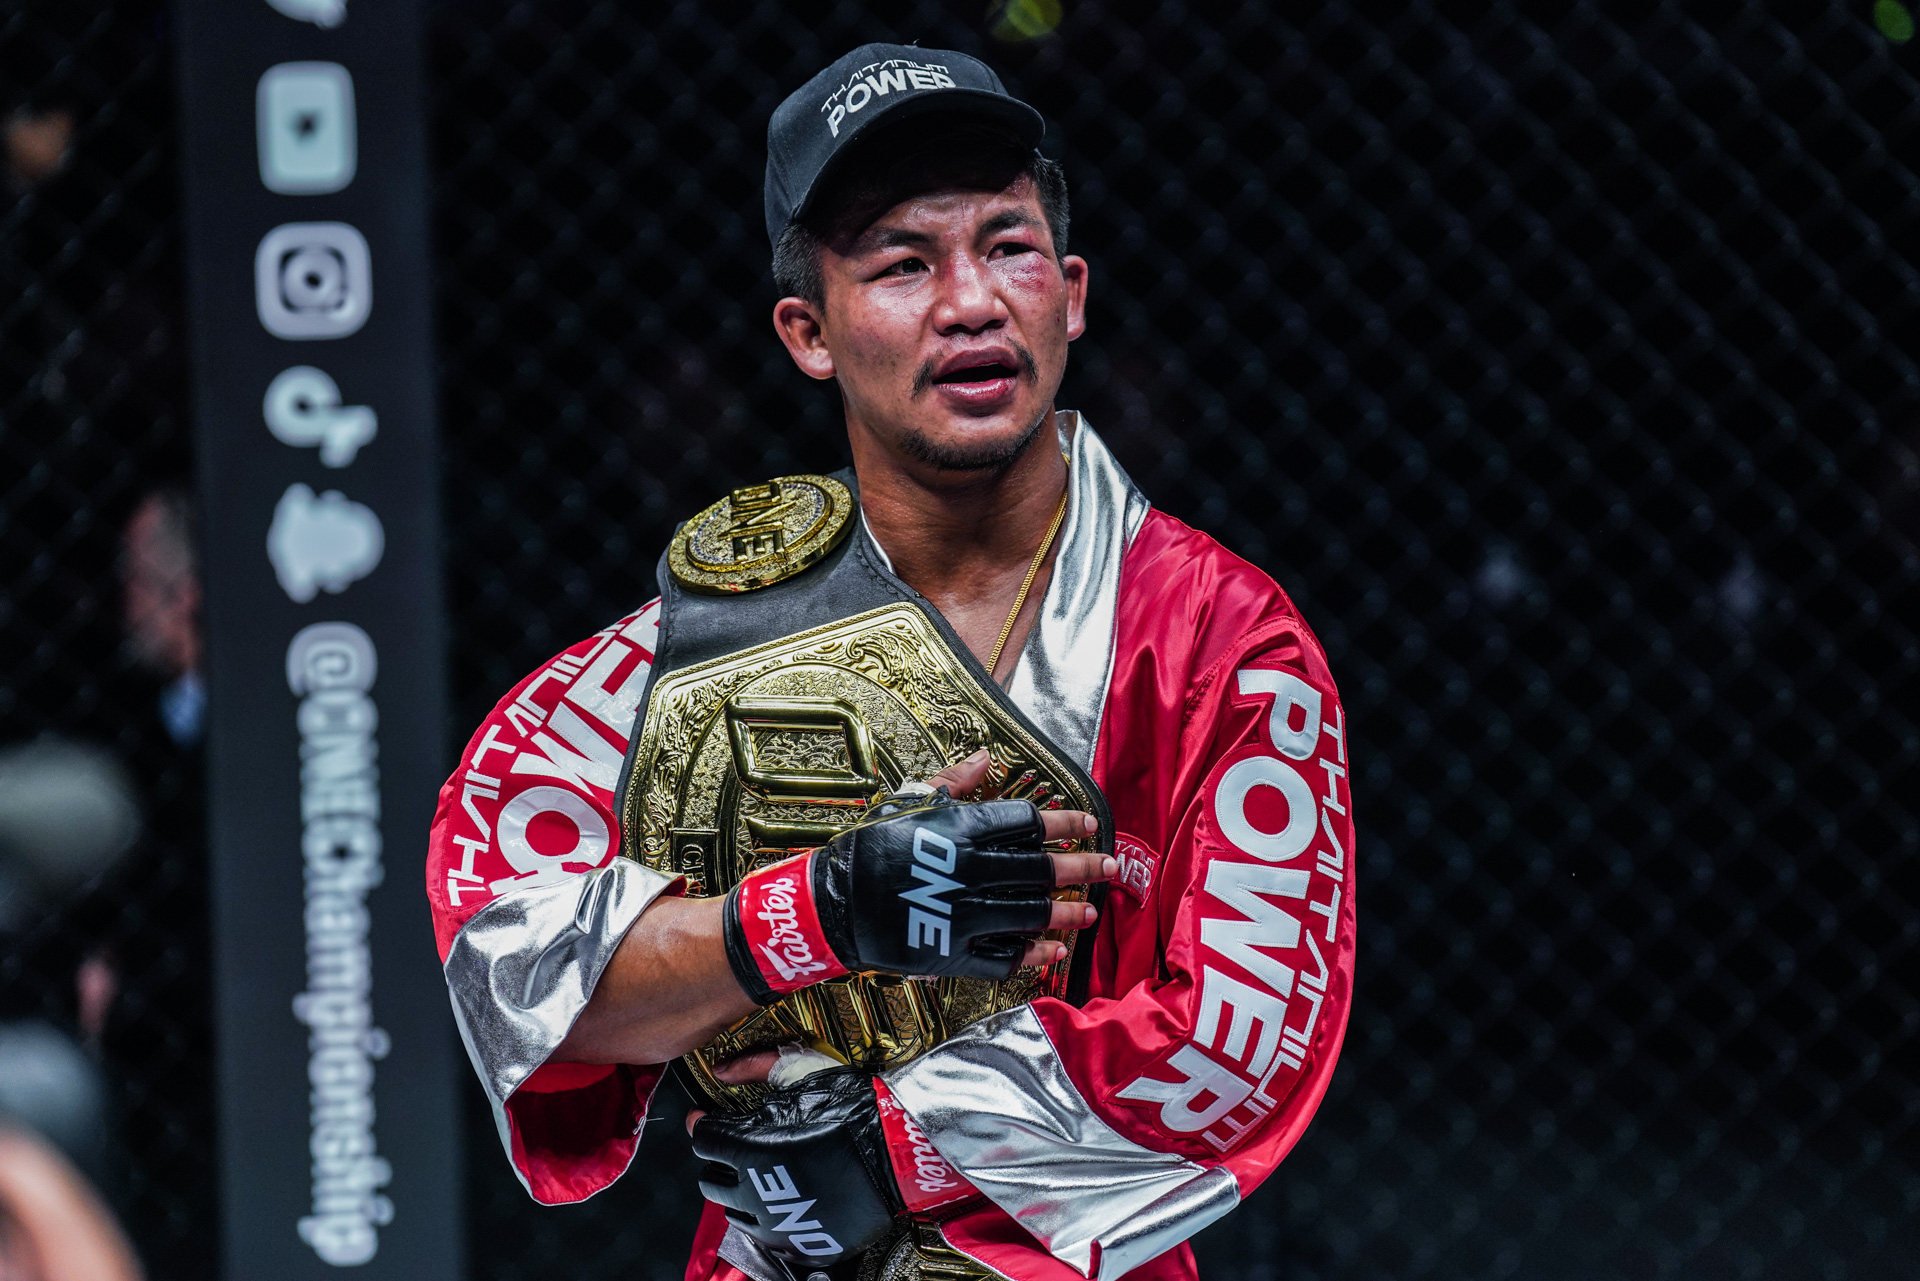 Rodtang Jitmuangnon is ONE Championship’s flyweight Muay Thai champion.